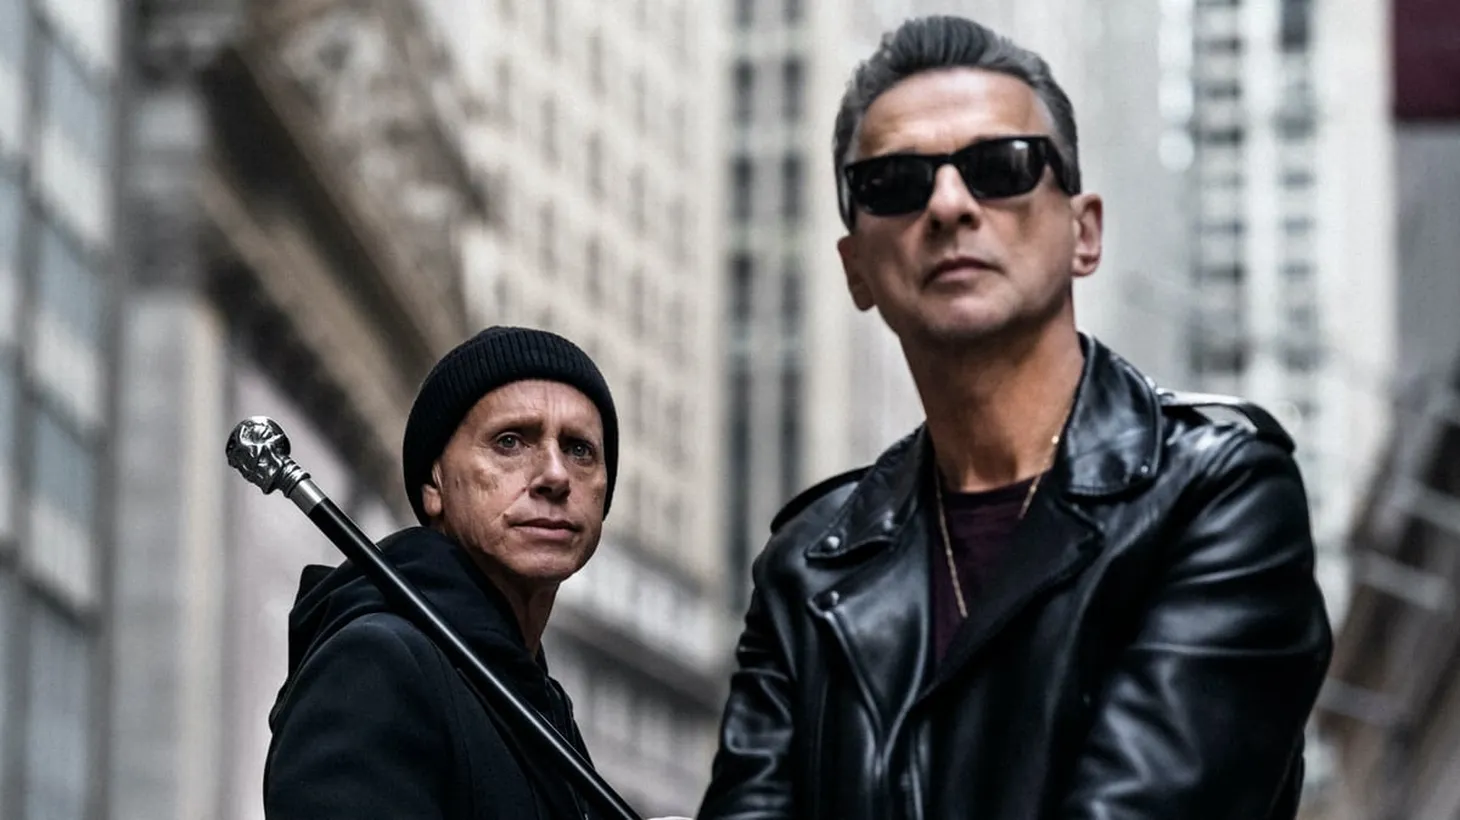 Depeche Mode US Store